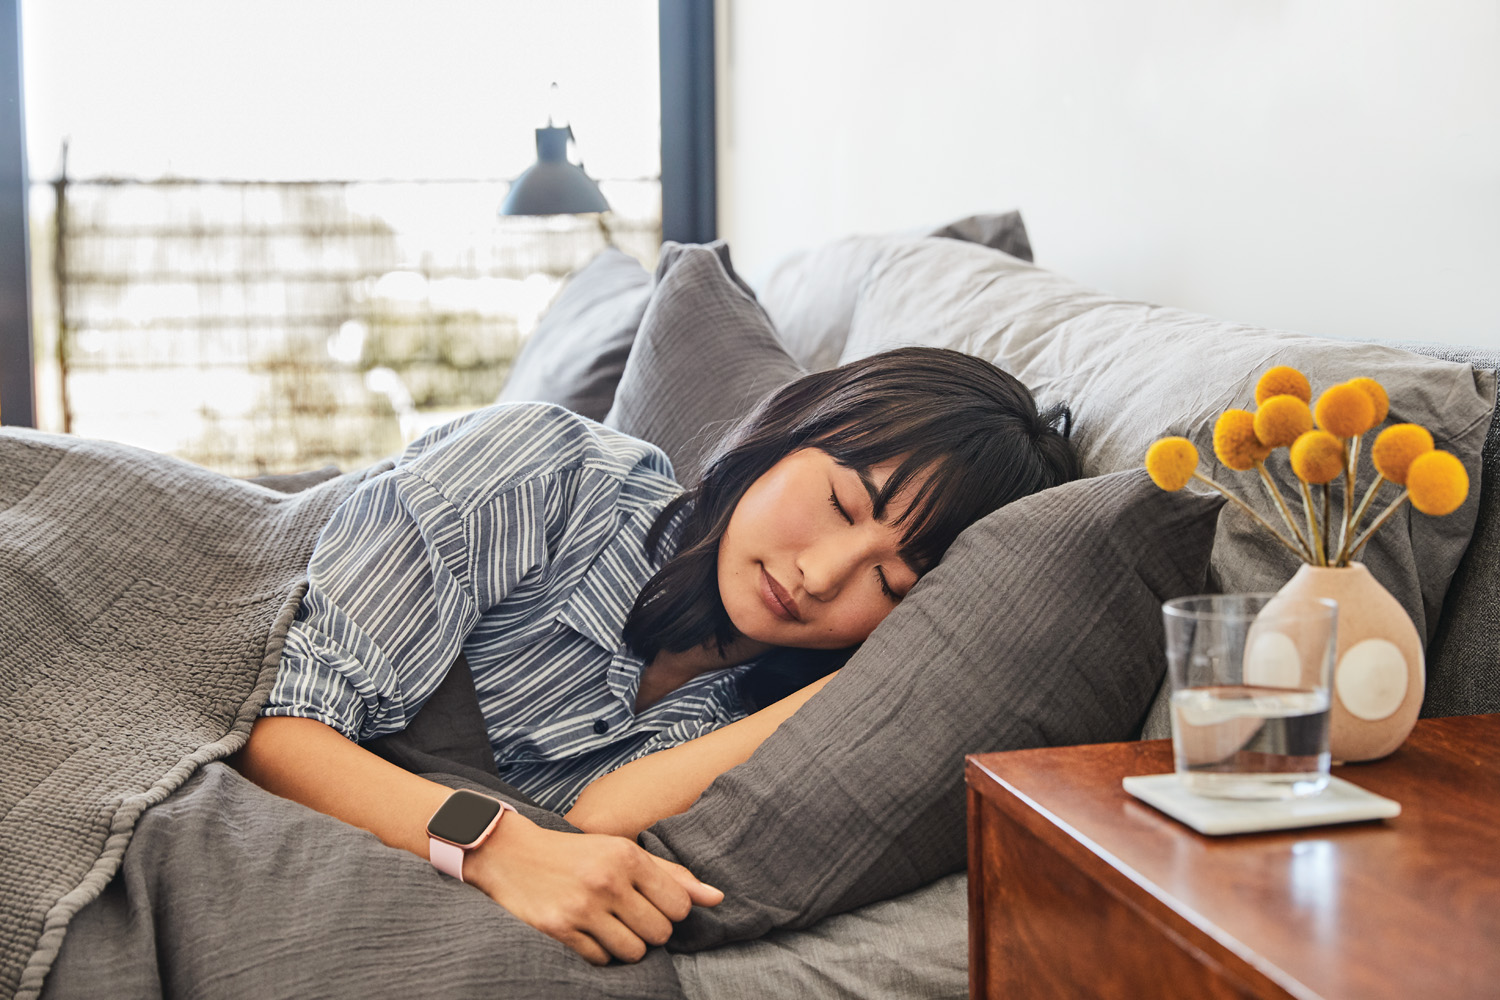 Fitbit World Sleep Day | FitBit | 13 มีนาคม 'วันนอนหลับโลก' เตรียมตัวนอนกันหรือยัง มีเทคนิคการทำให้นอนง่ายๆ จาก fitbit มาฝาก